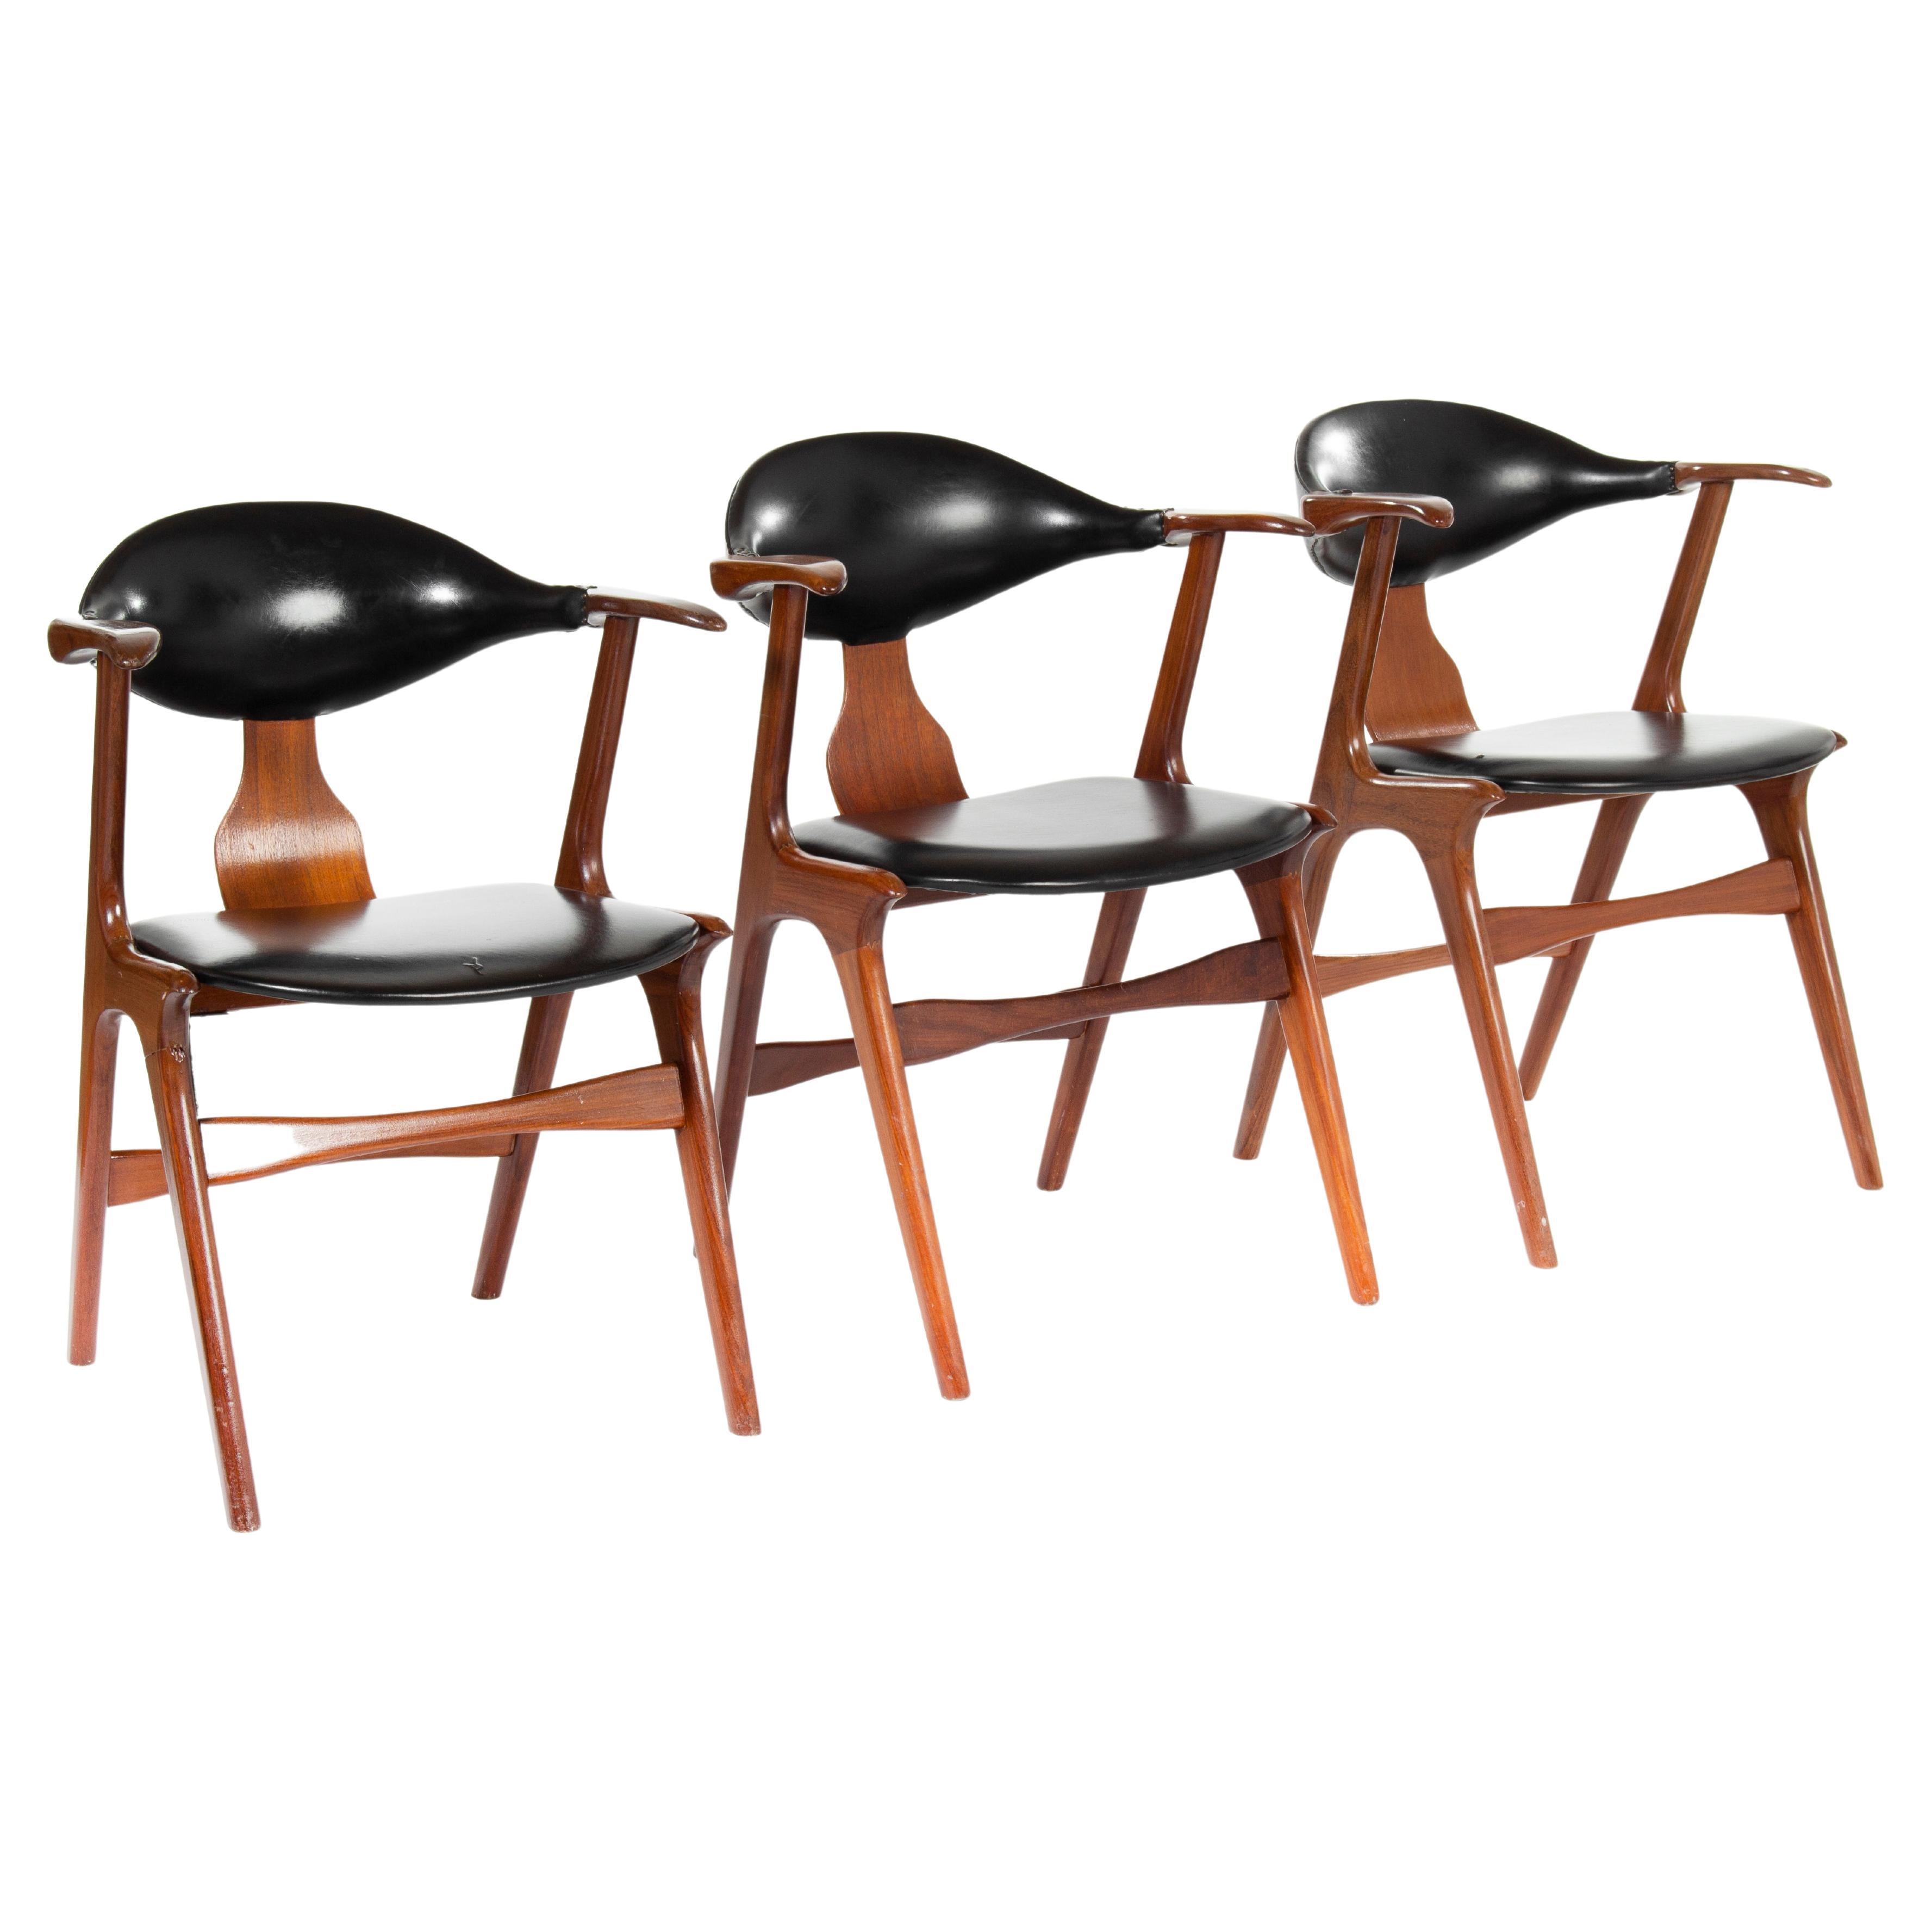 Louis Van Teeffelen AWA Holland Cow Horn Chairs, 1950s, '3 Pieces'